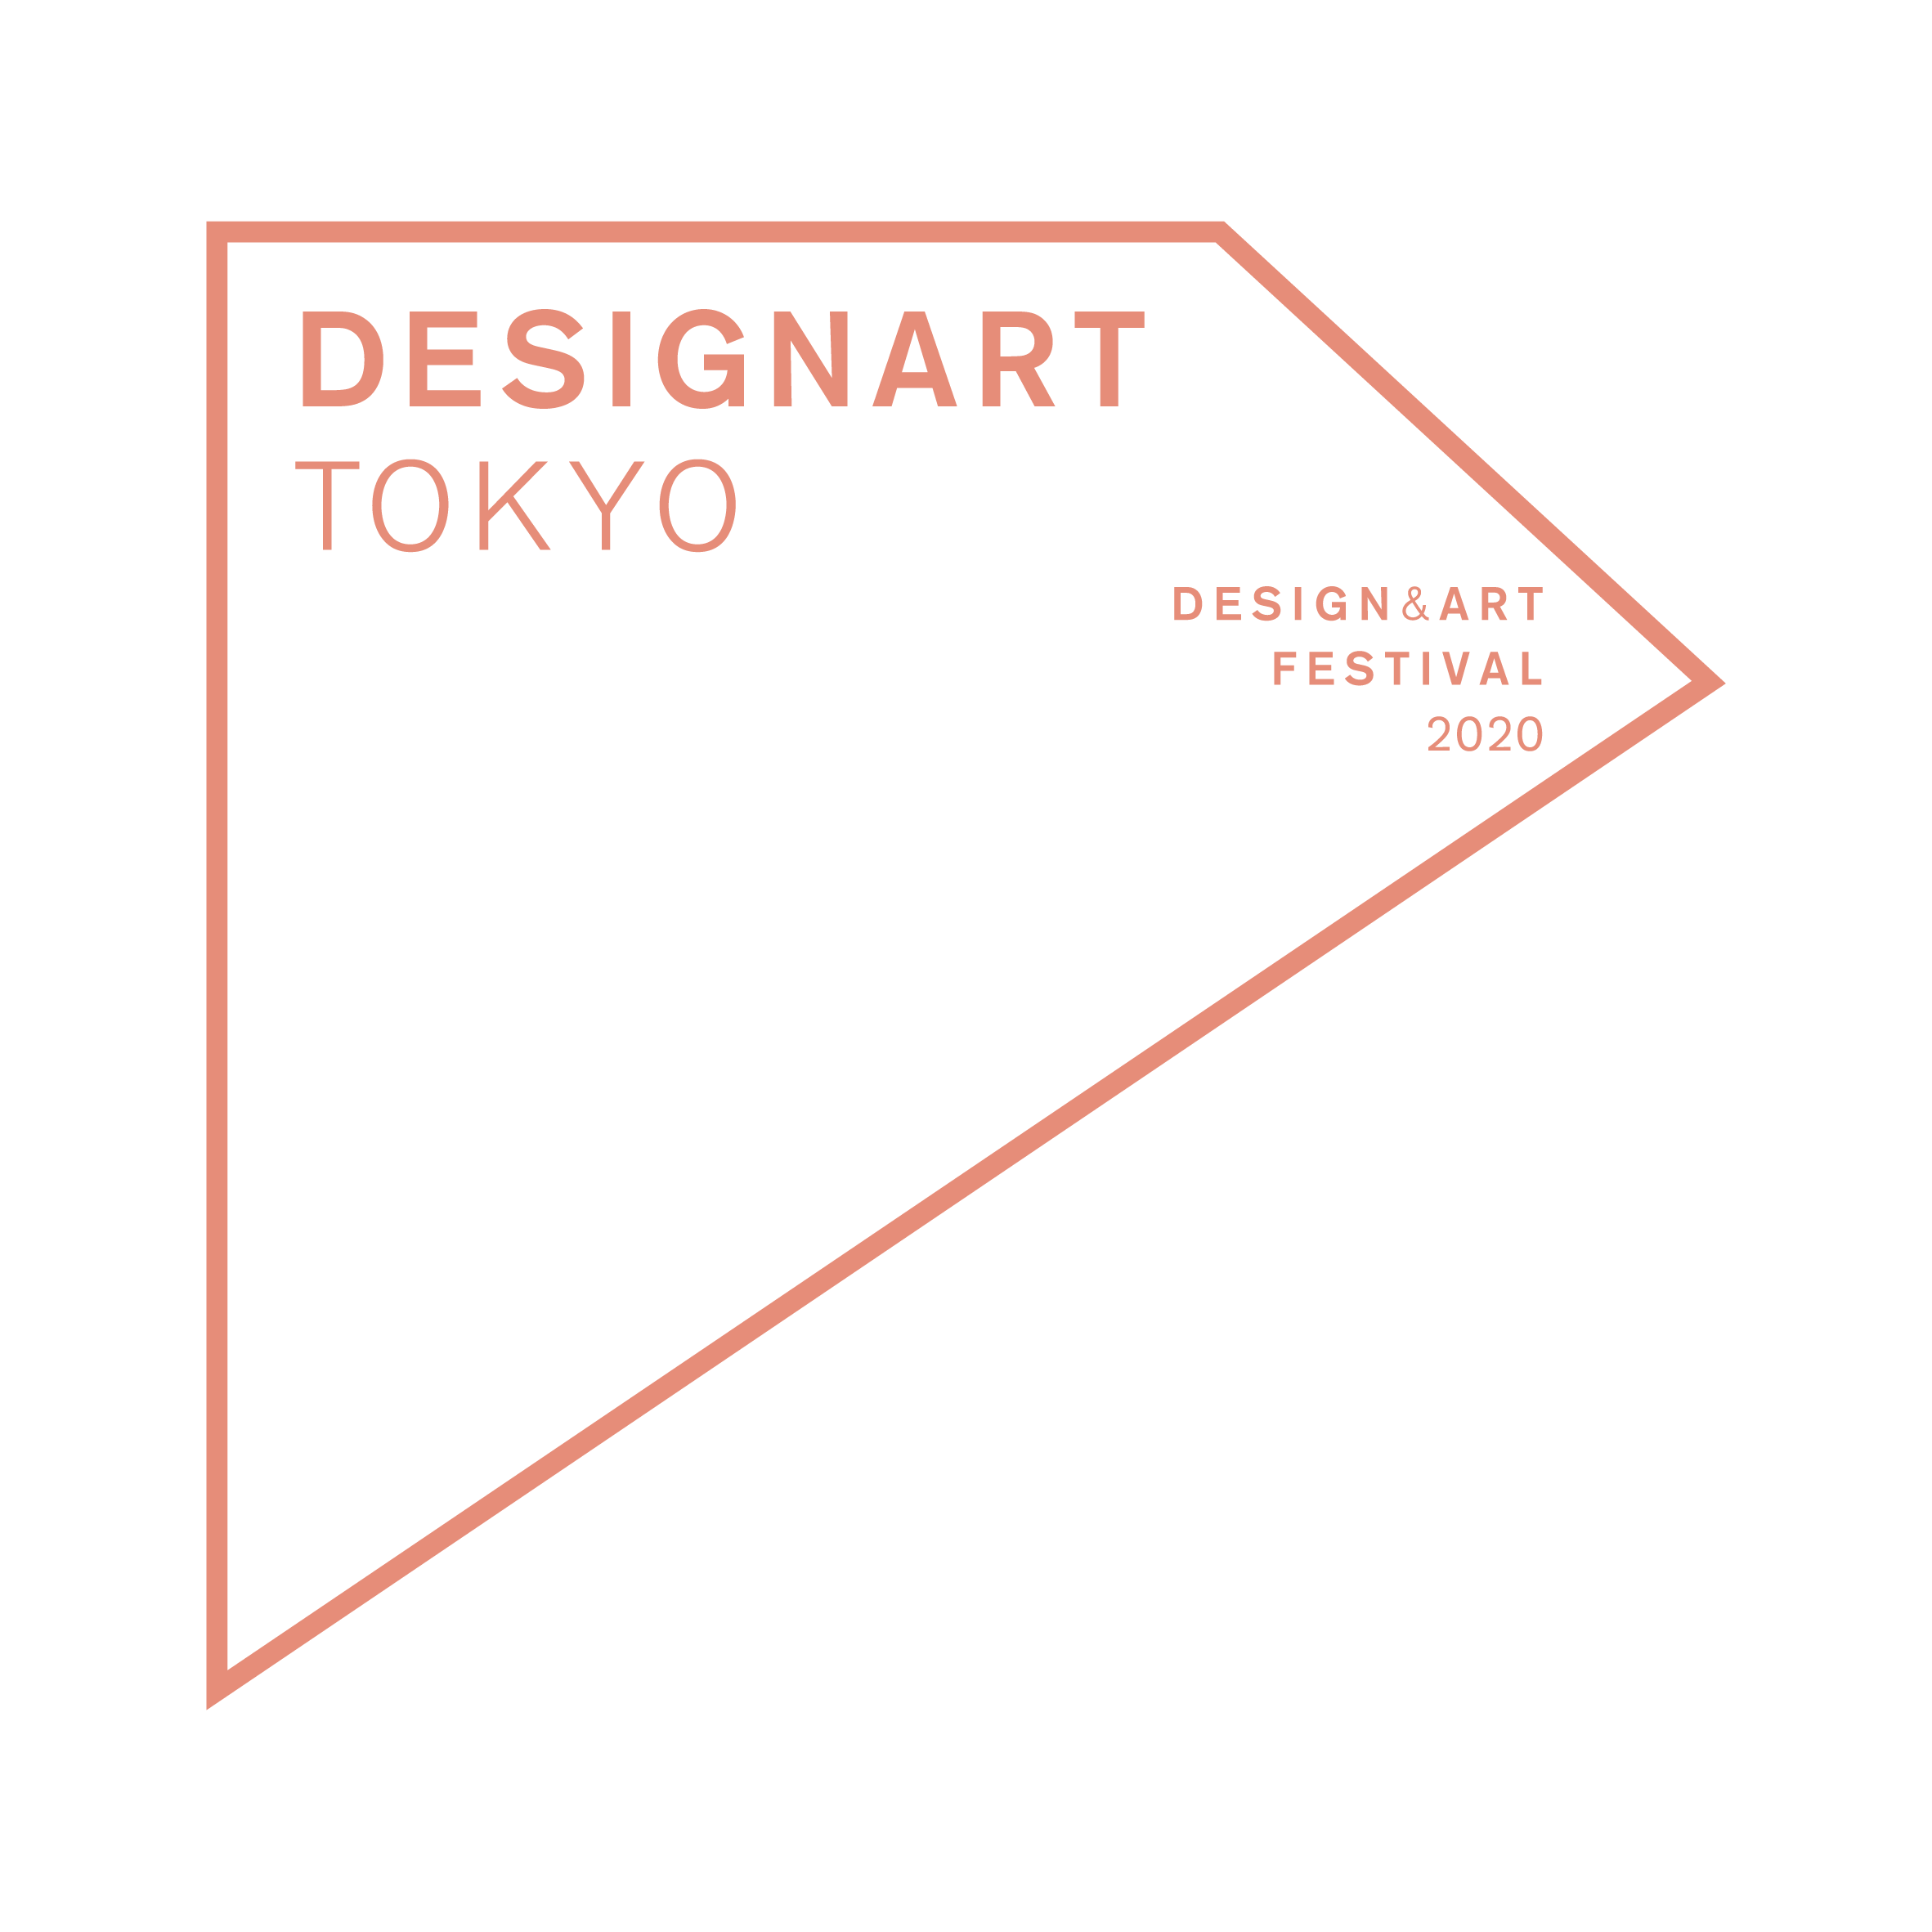 DESIGNART TOKYO 2020